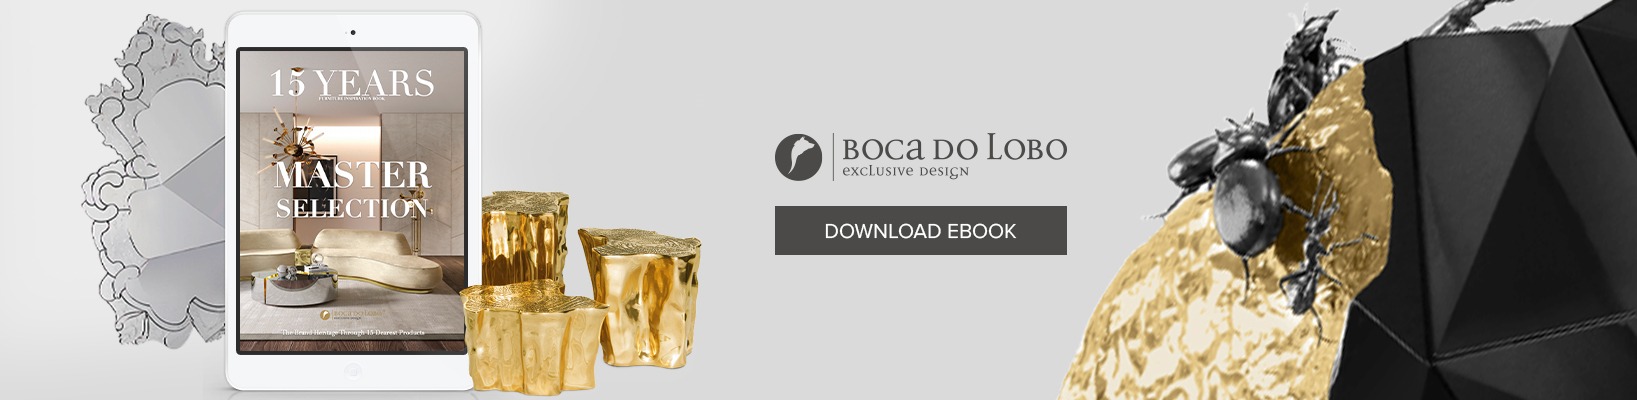 Boca do Lobo 15 years